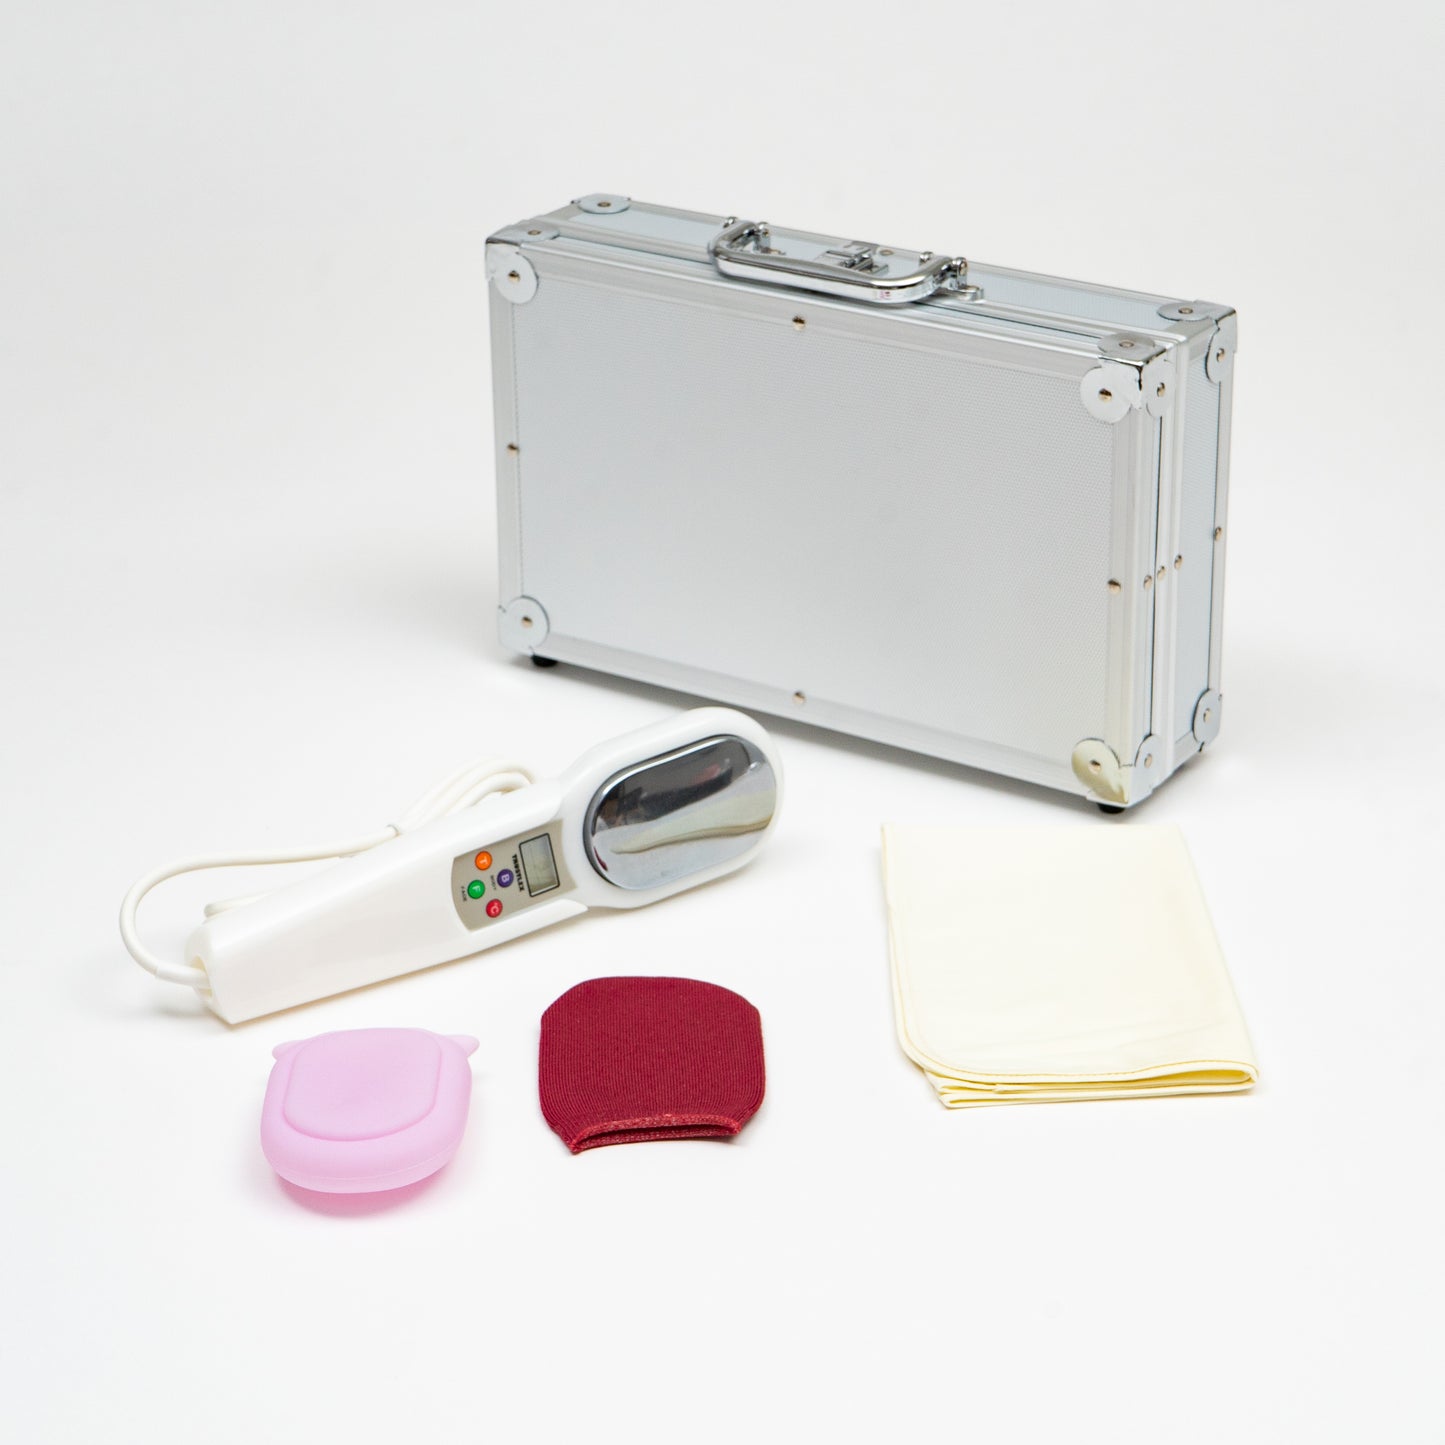 Portable Terahertz Heater